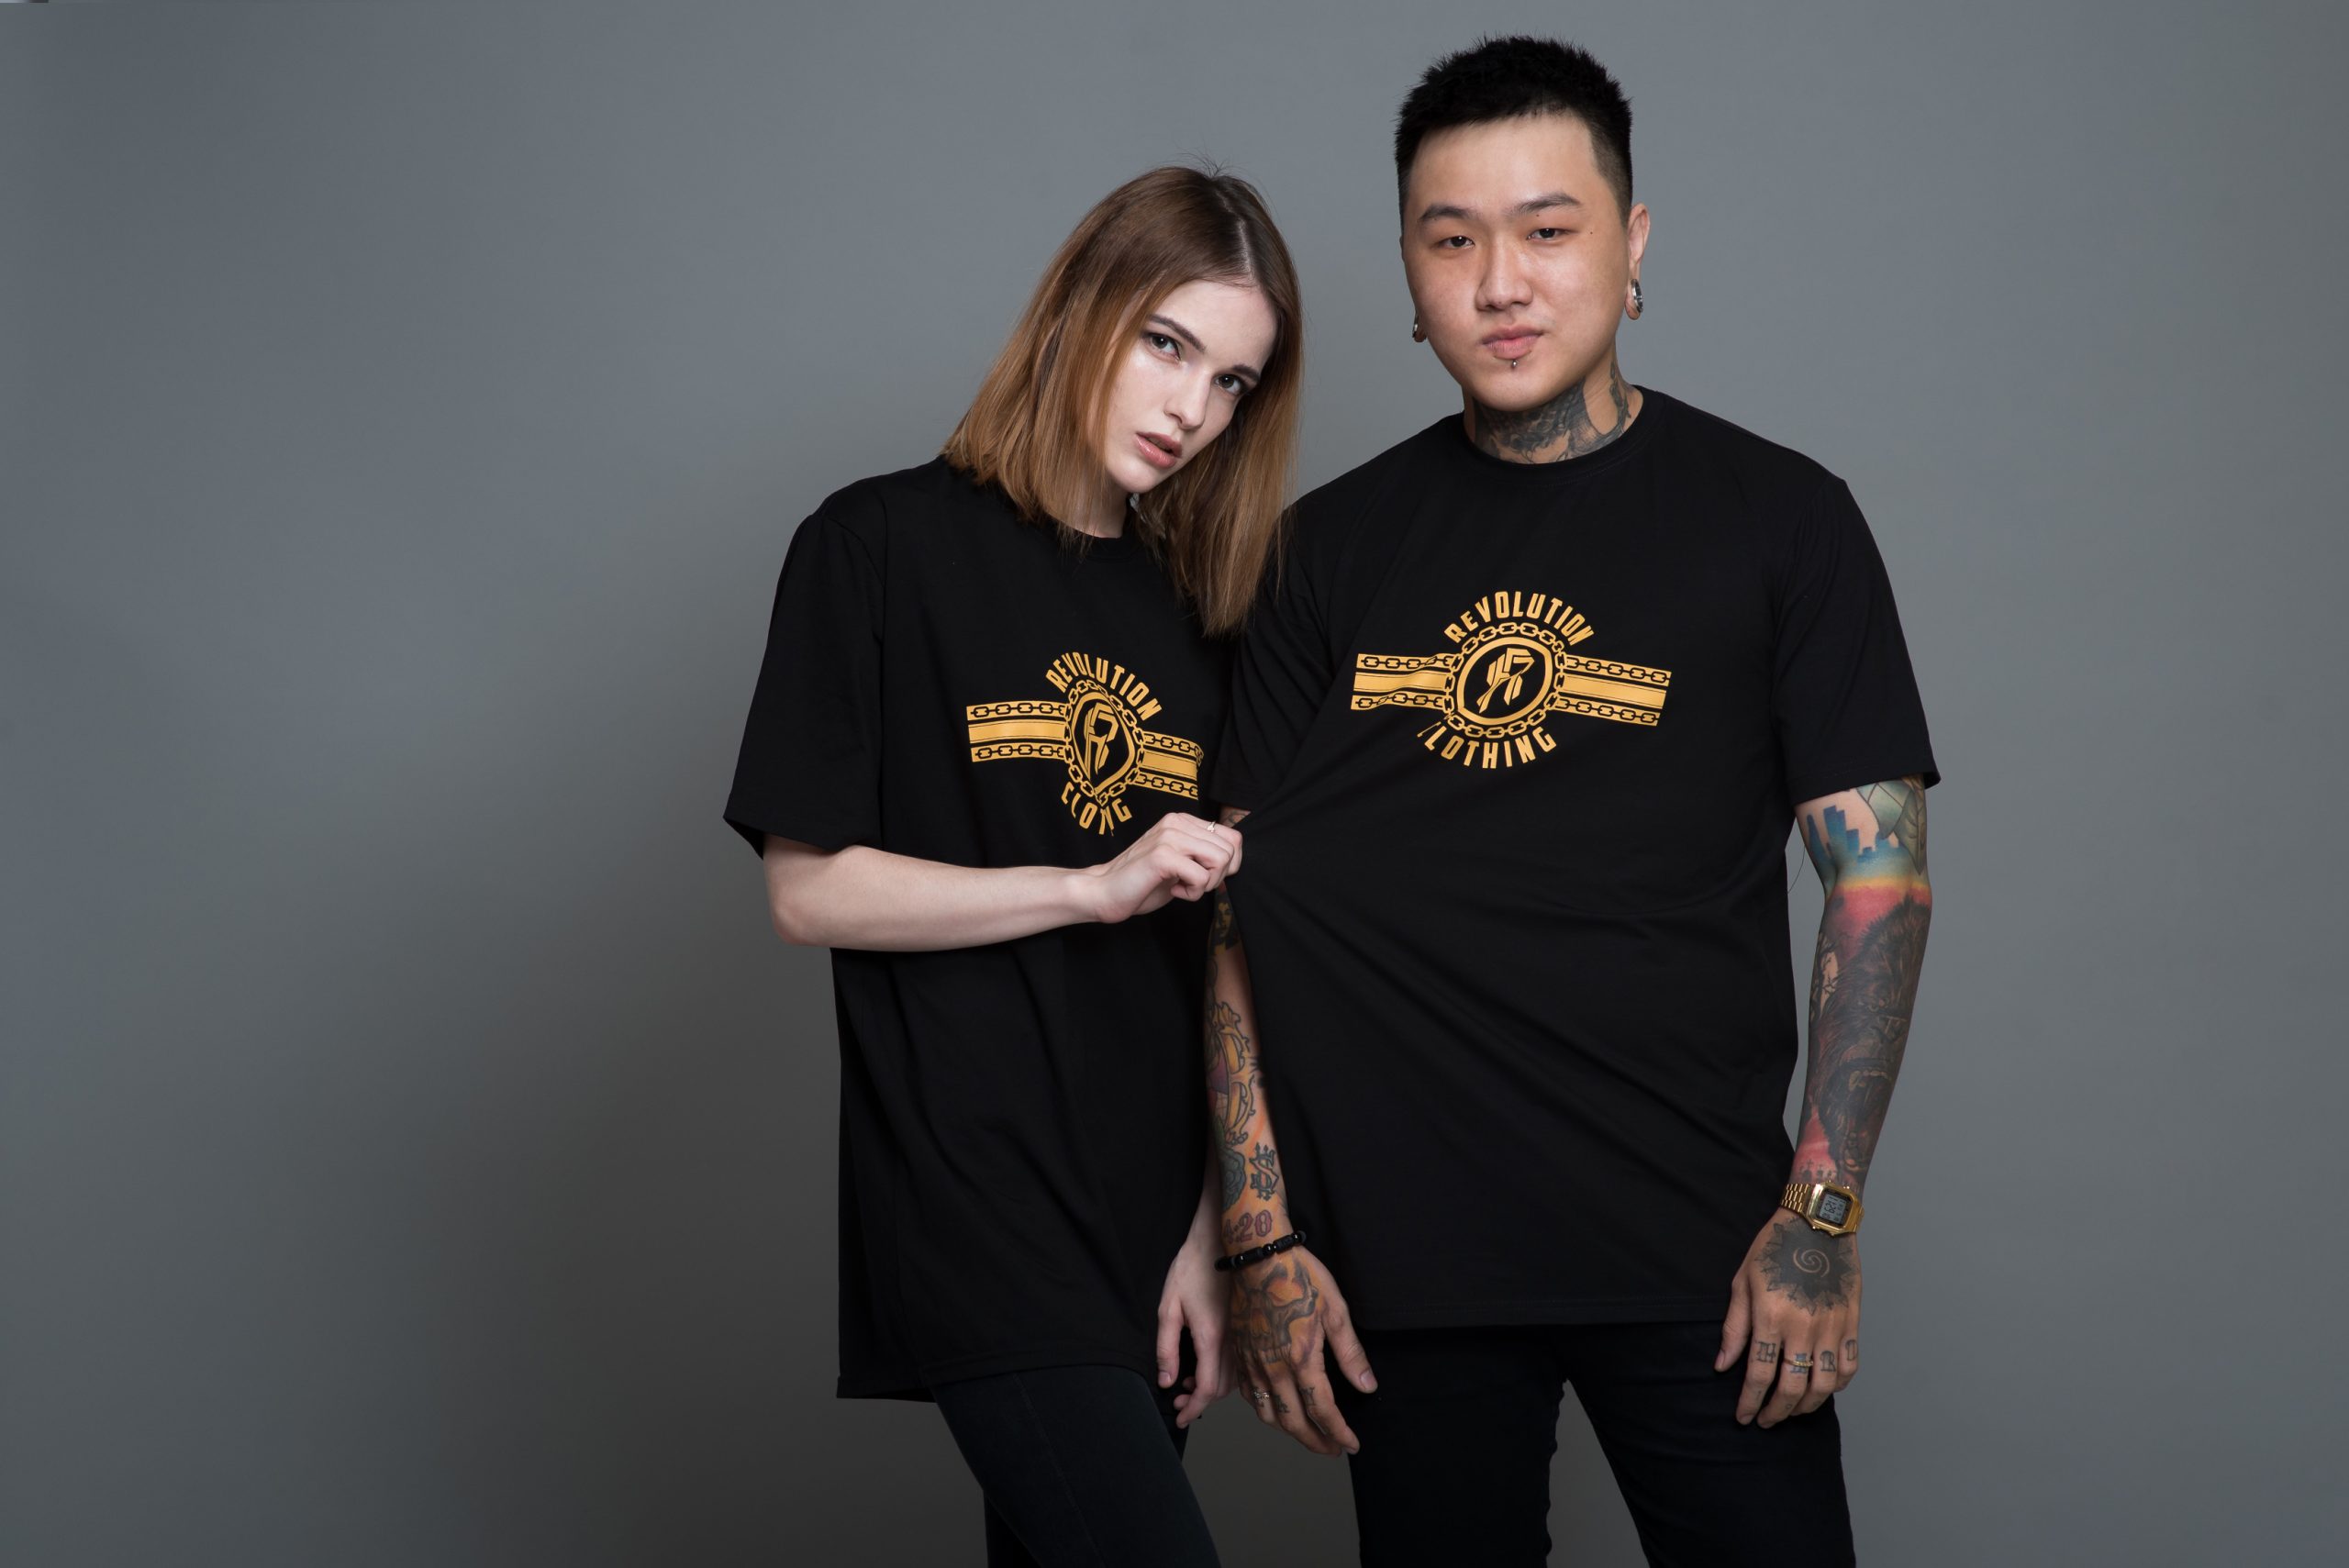 Revolution Gold Chainz T-shirt OVERSIZE FIT